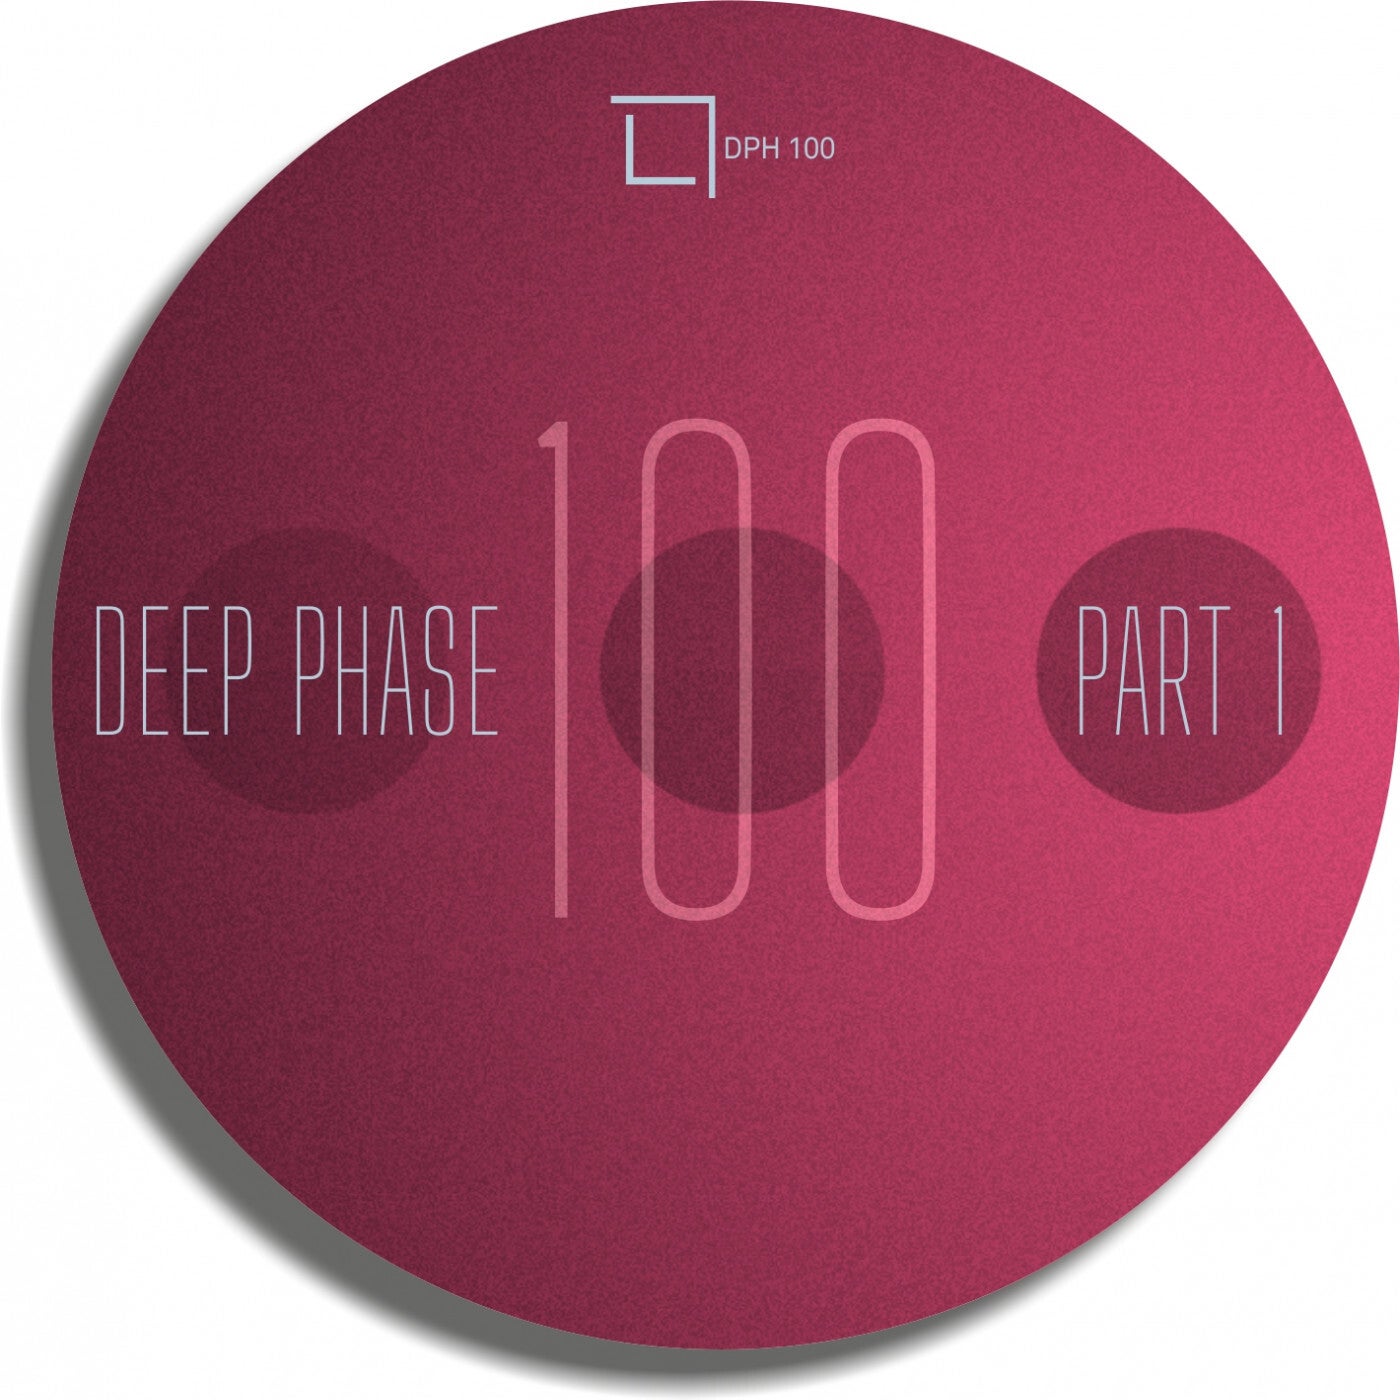 Deep Phase 100 Part 01